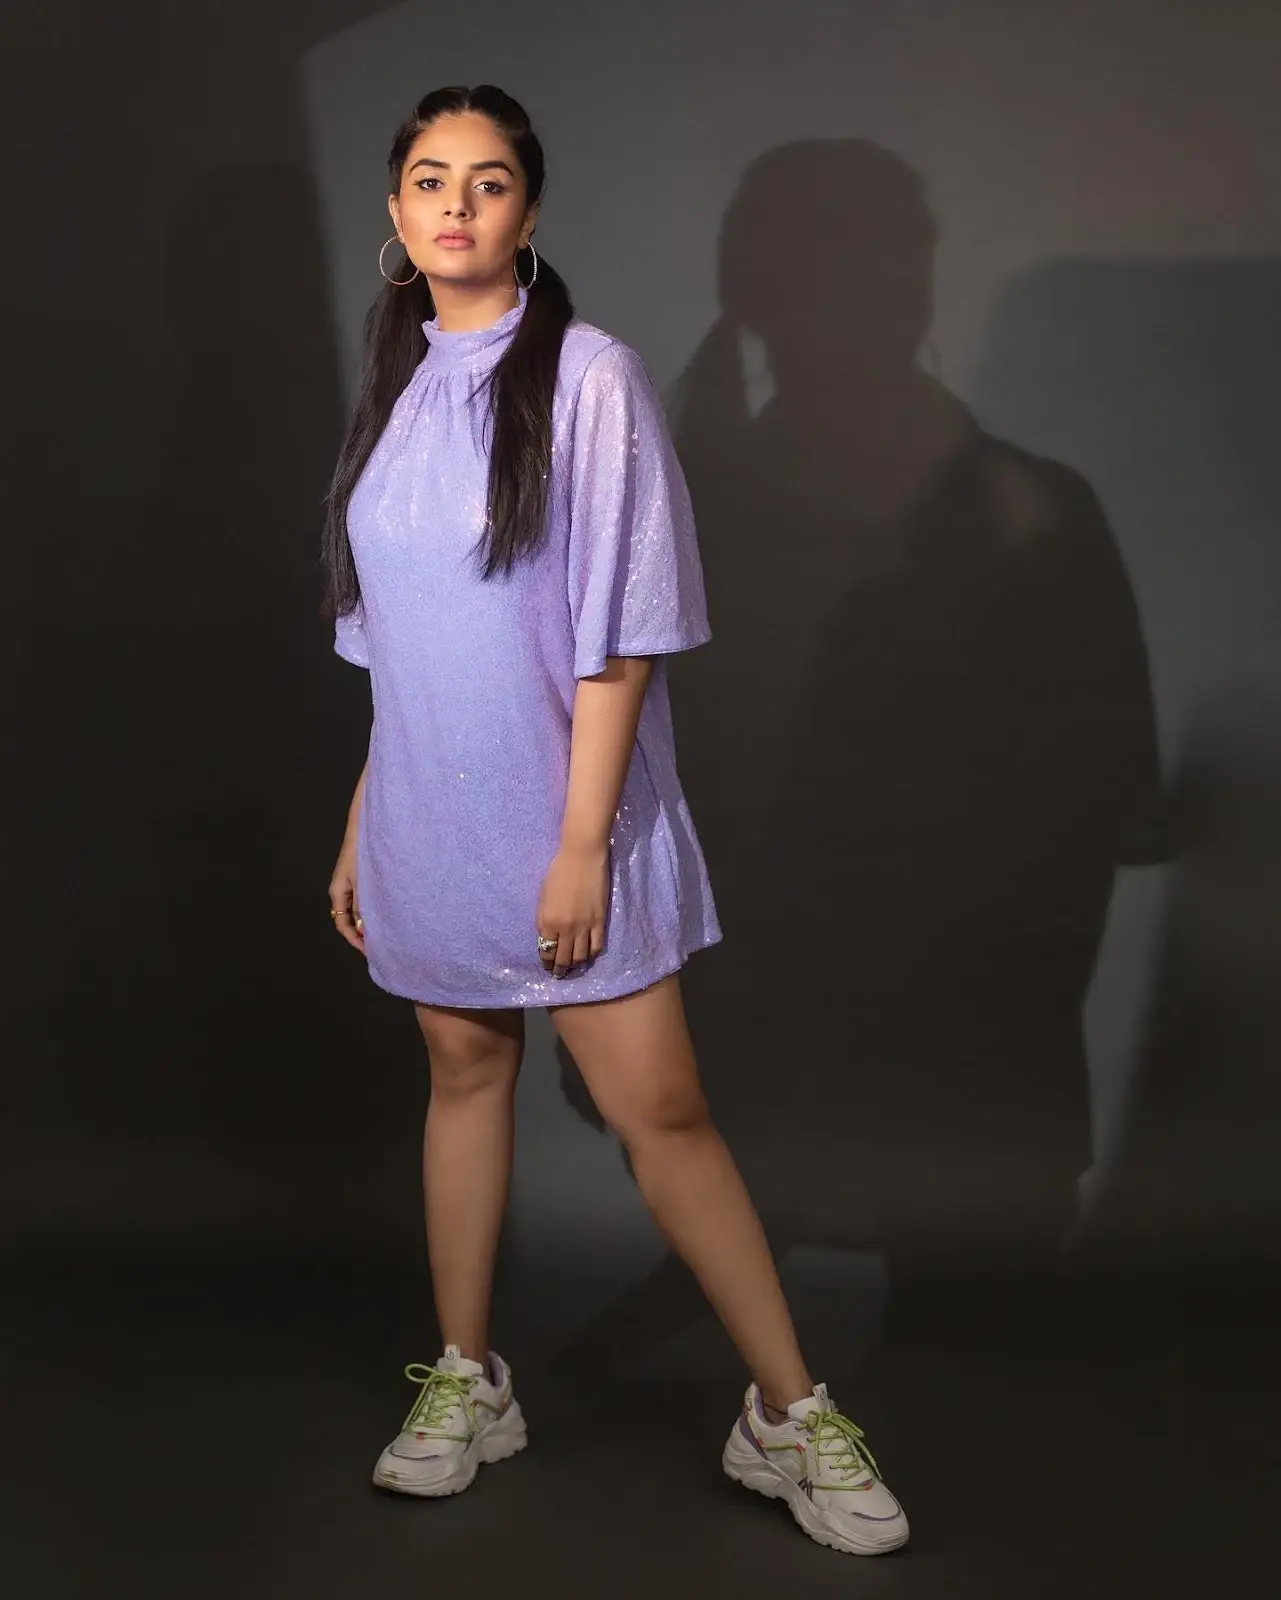 INDIAN TV ACTRESS SREEMUKHI LONG LEGS SHOW IN MINI VIOLET FROCK 8